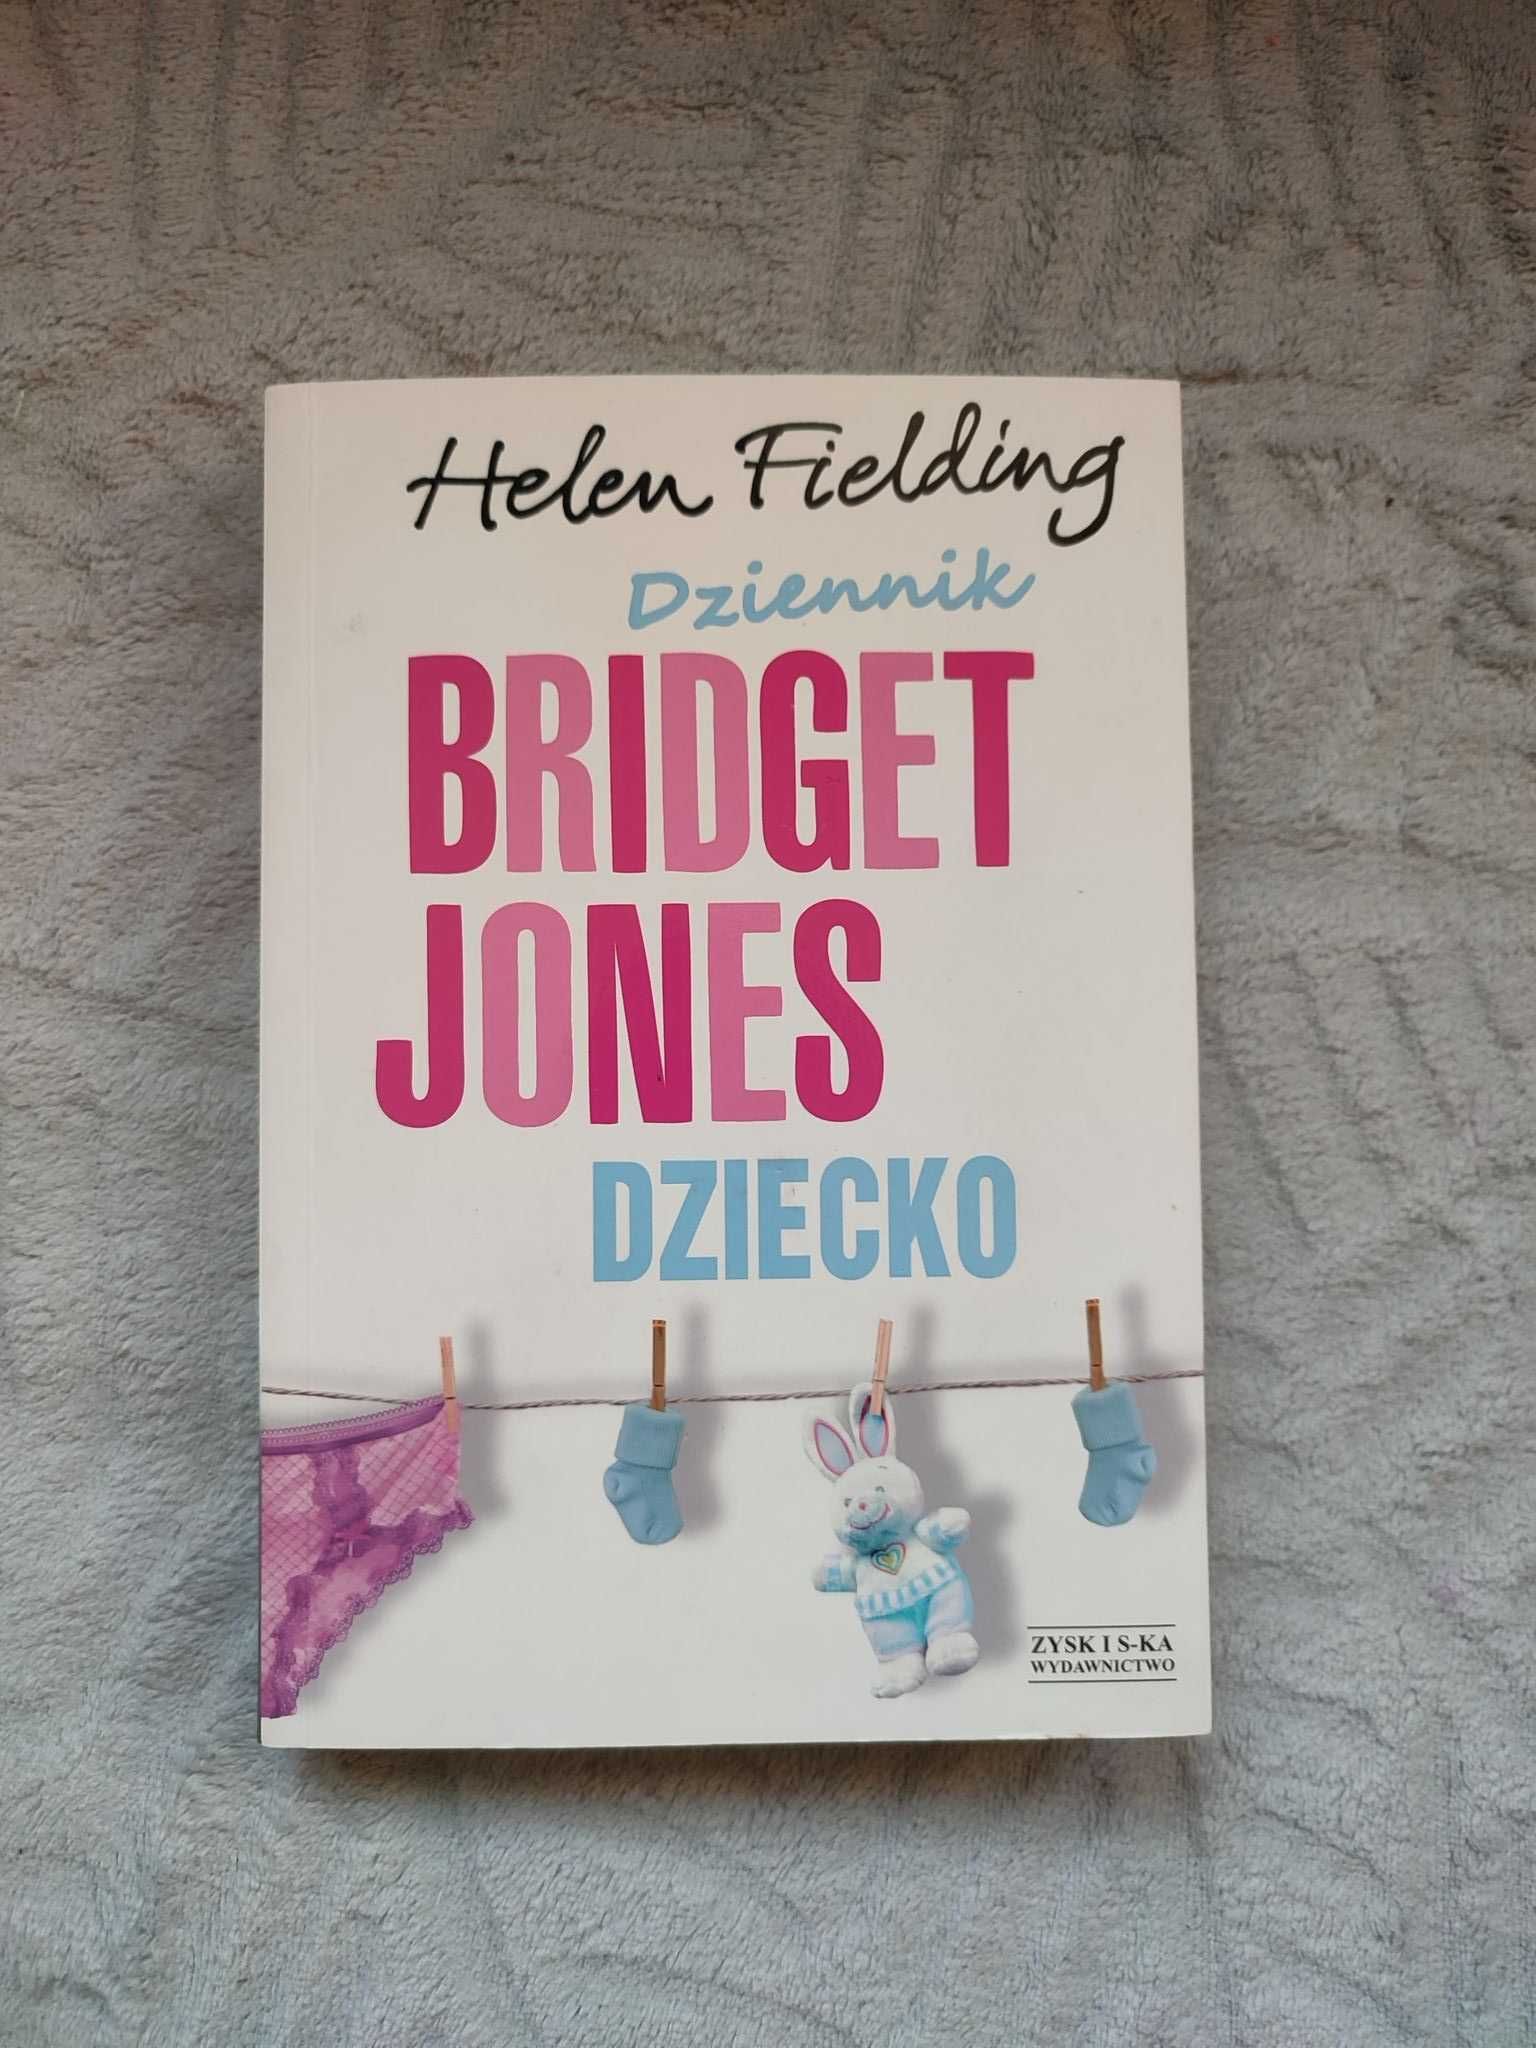 Książka "Dziennik Bridget Jones - dziecko" - Helen Fielding